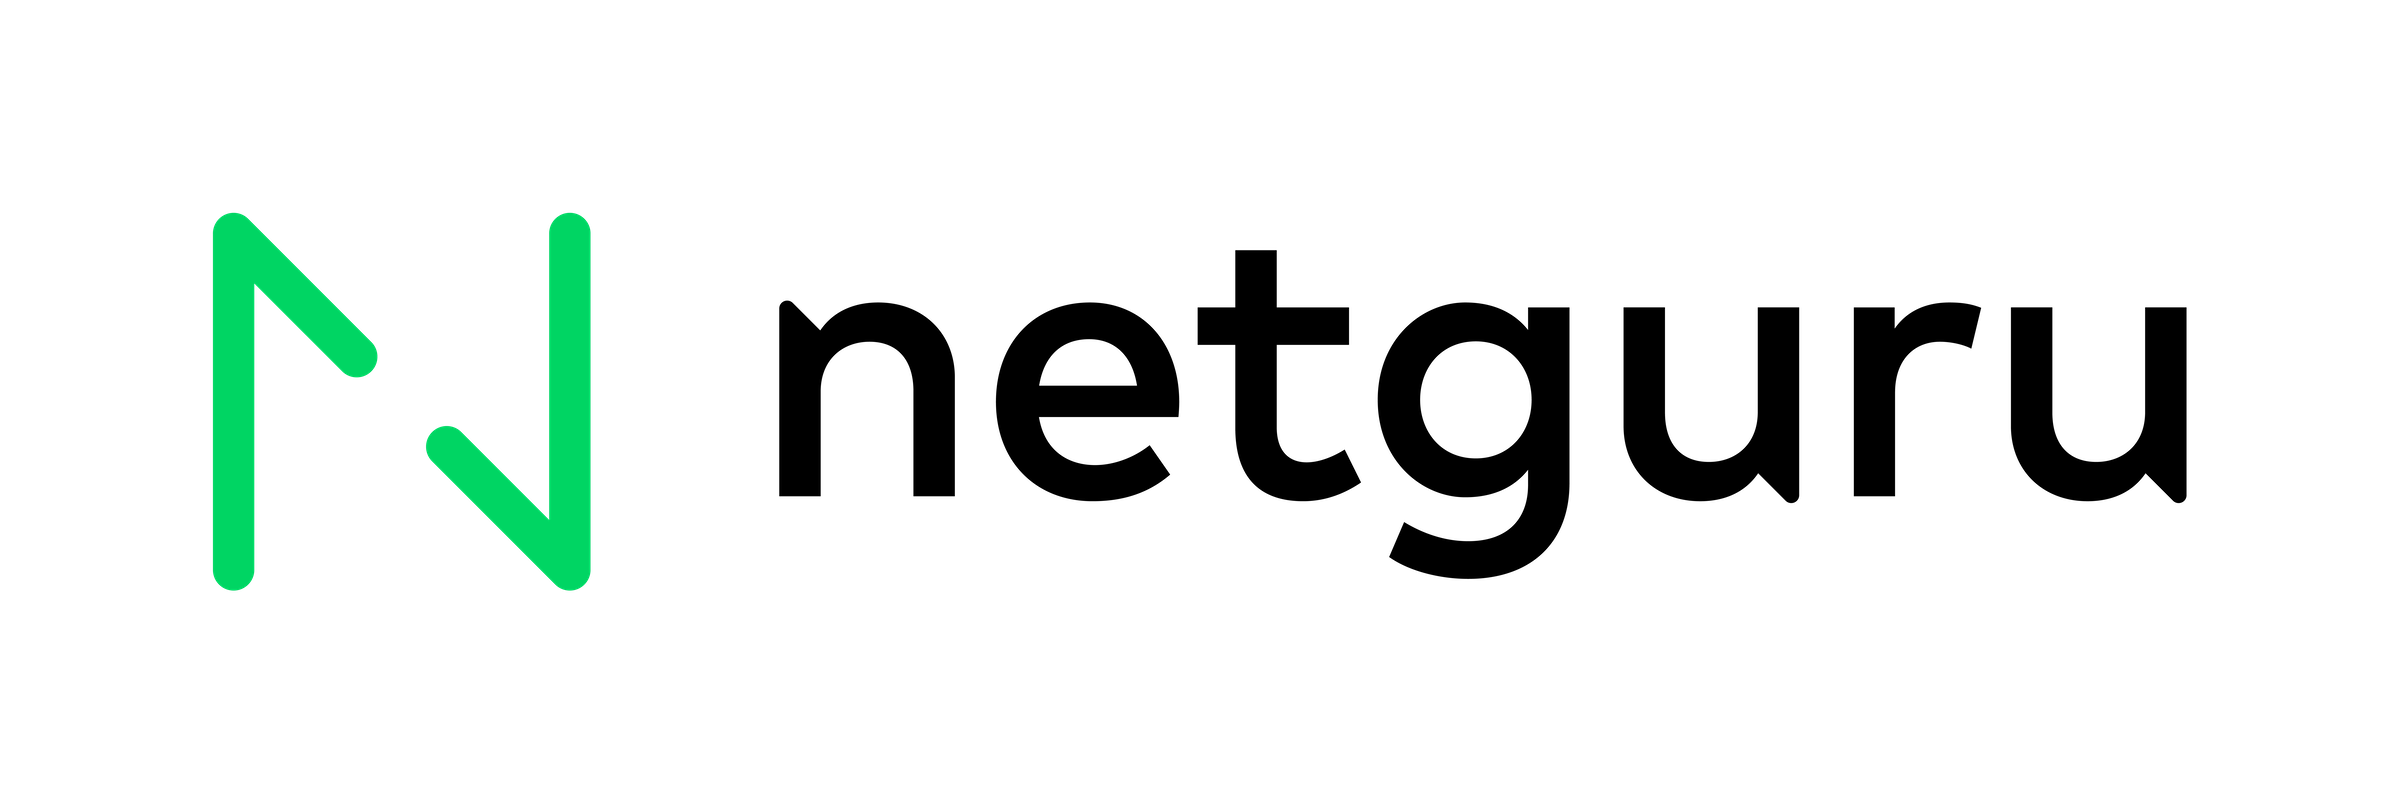 Netguru's logo